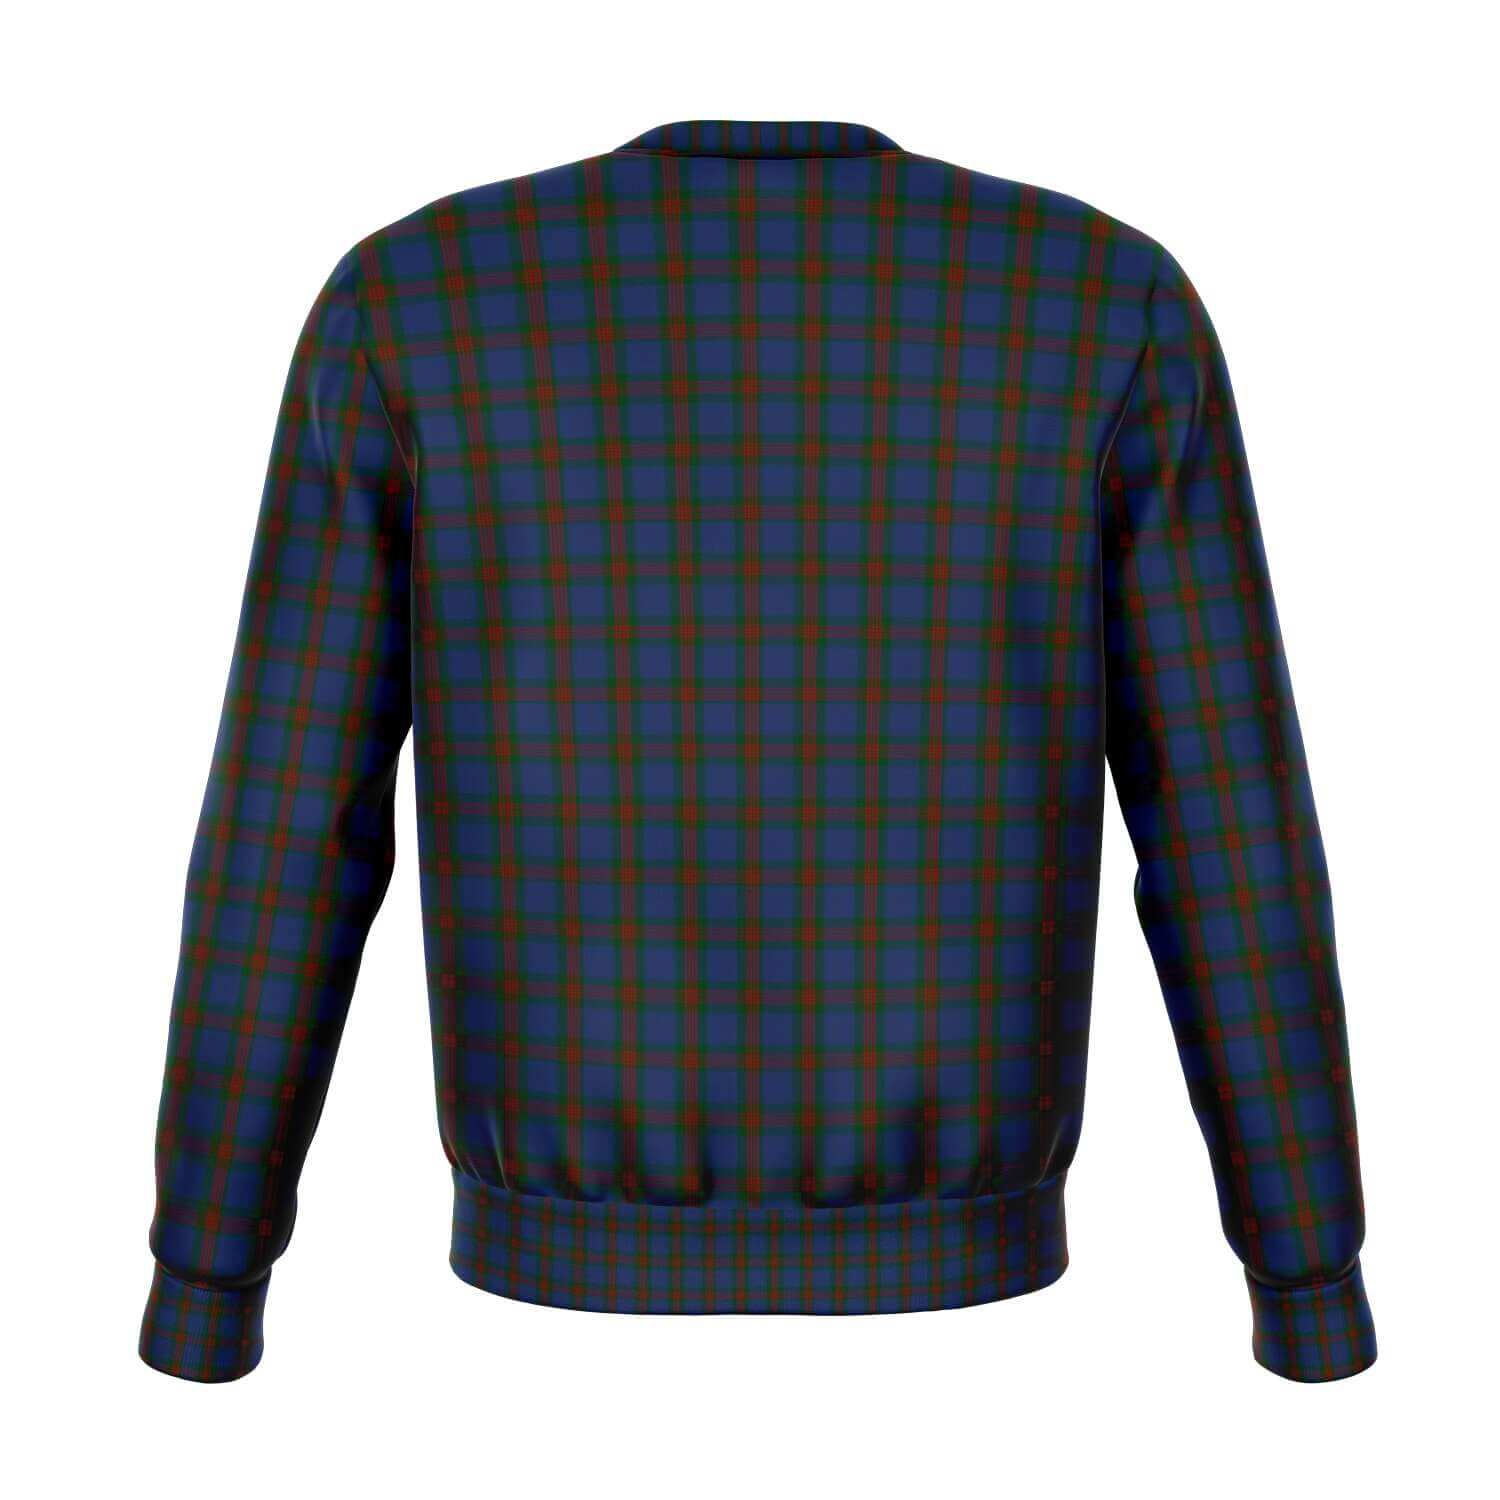 Wilson-Tartan-Athletic-Fashion-sweatshirts-back